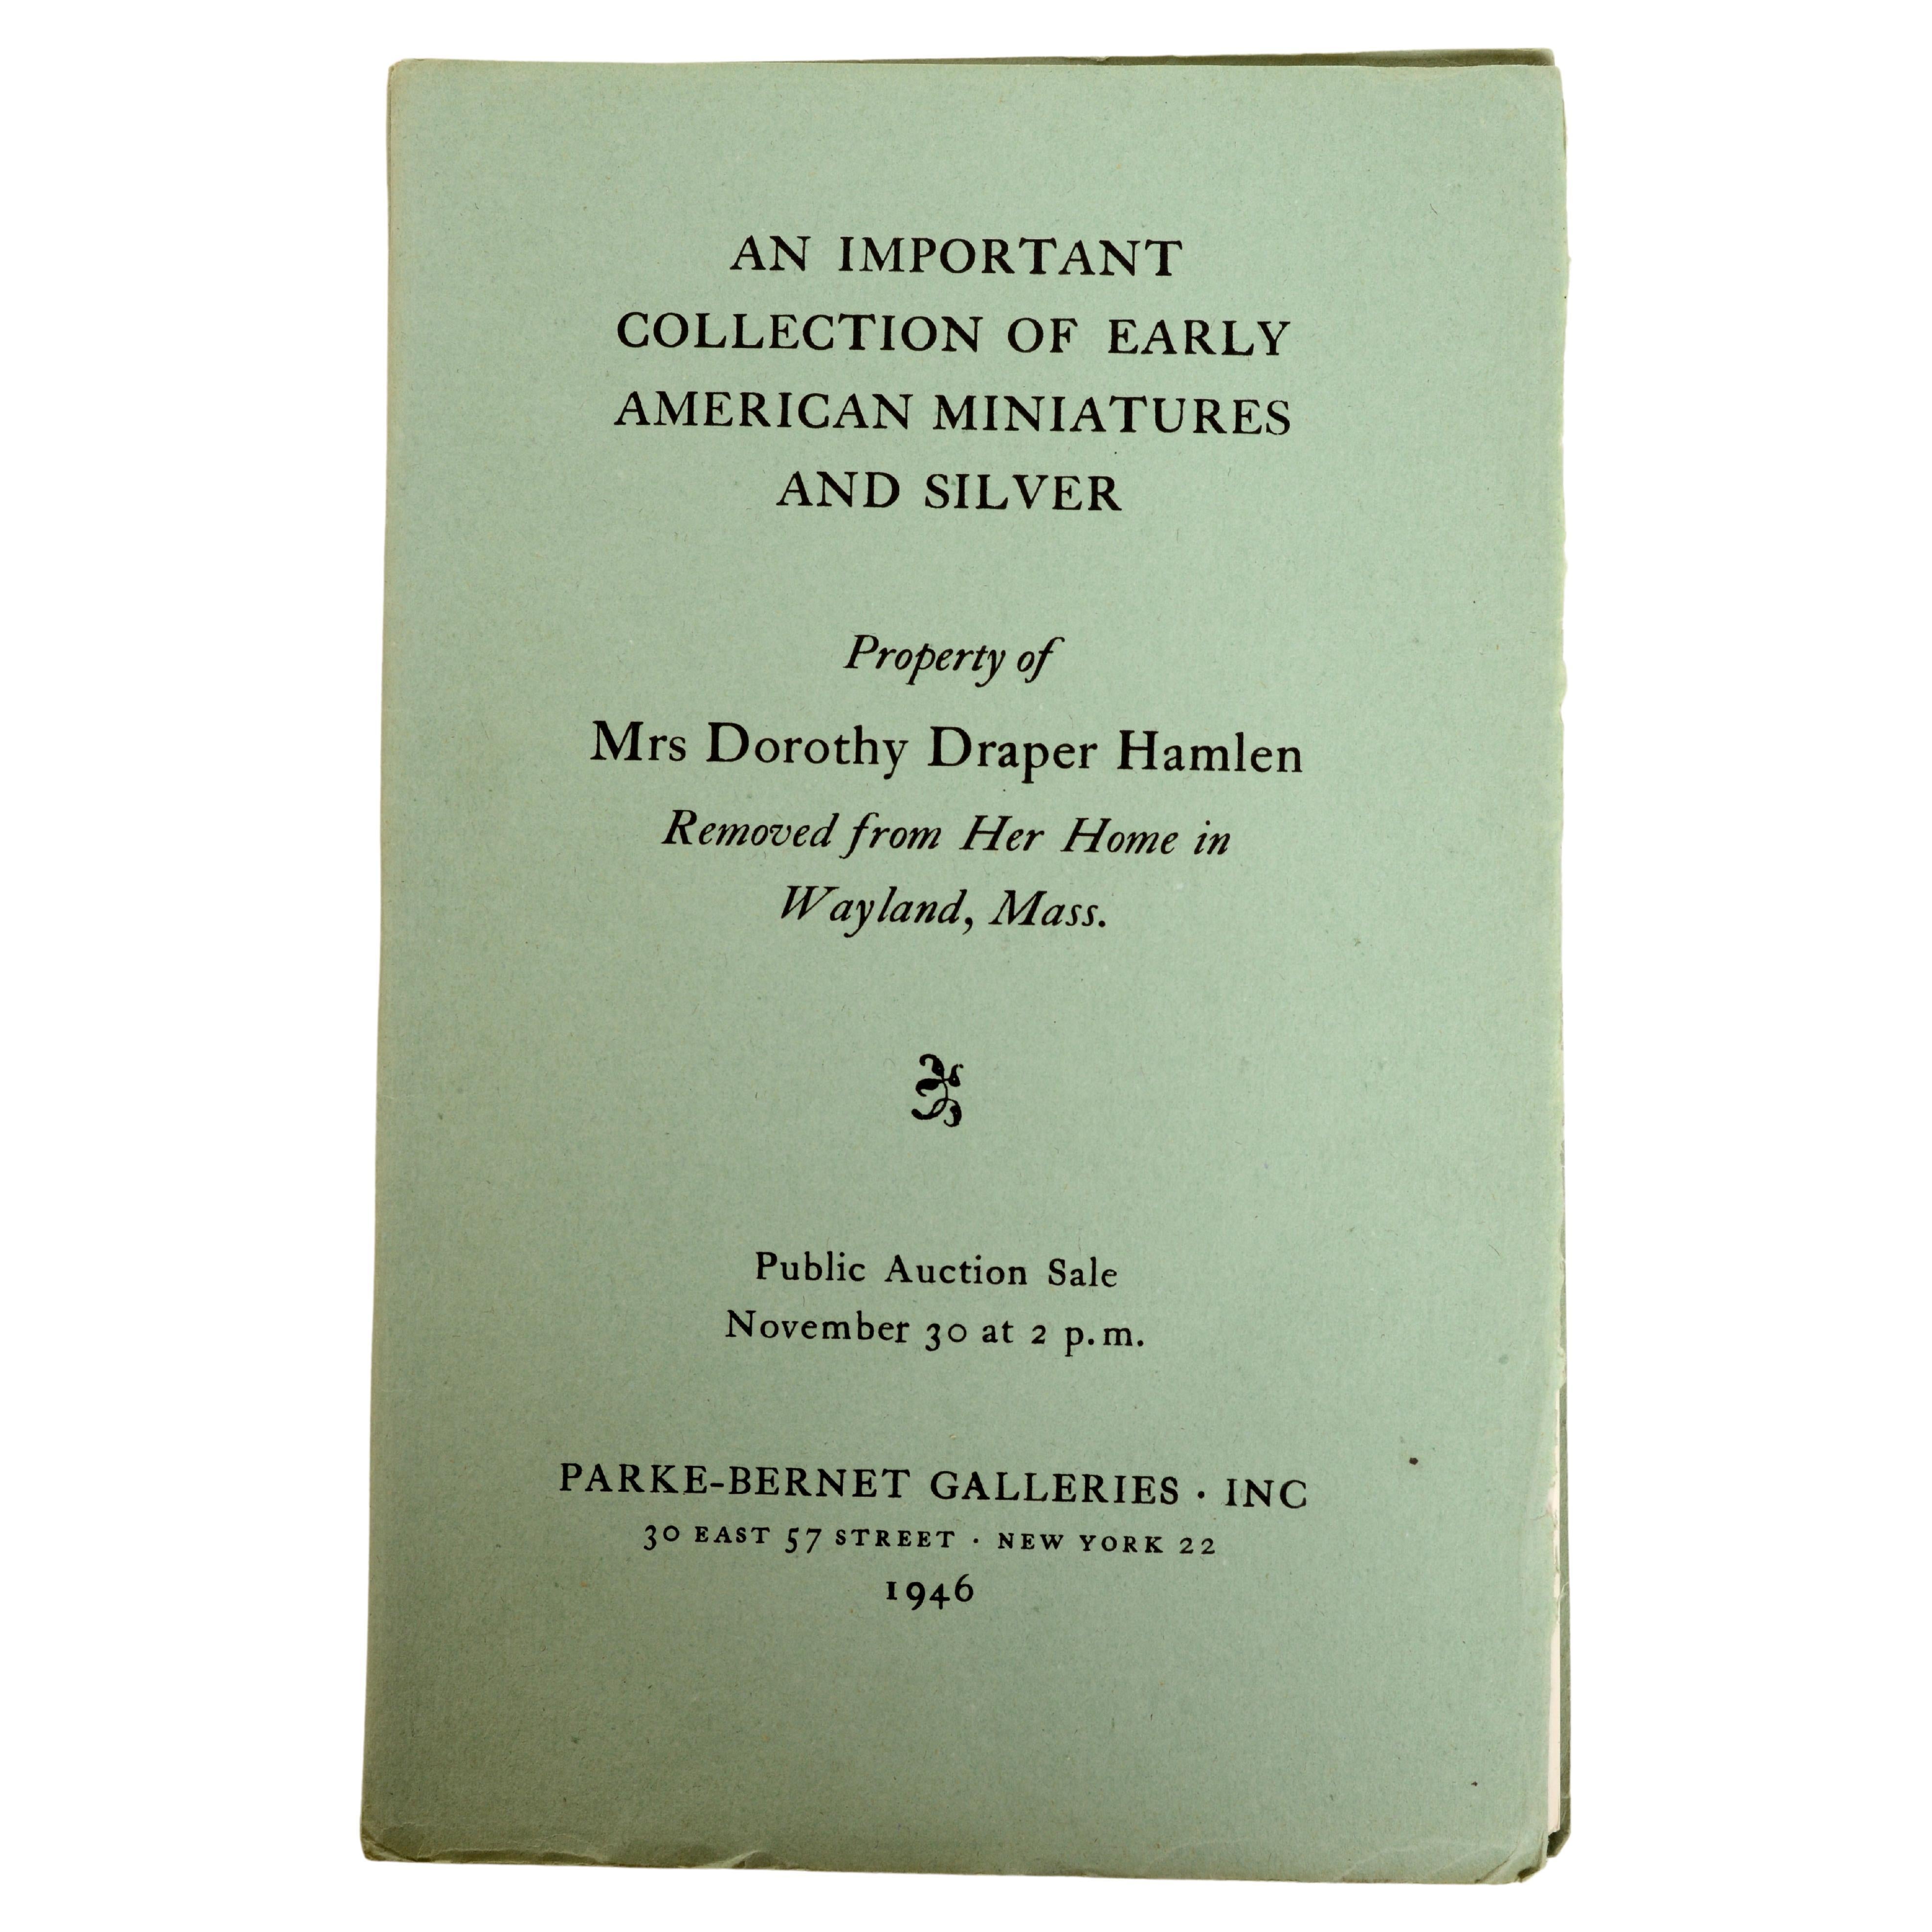 Property of Mrs Dorothy Draper Hamlen, Important Early American Miniatures